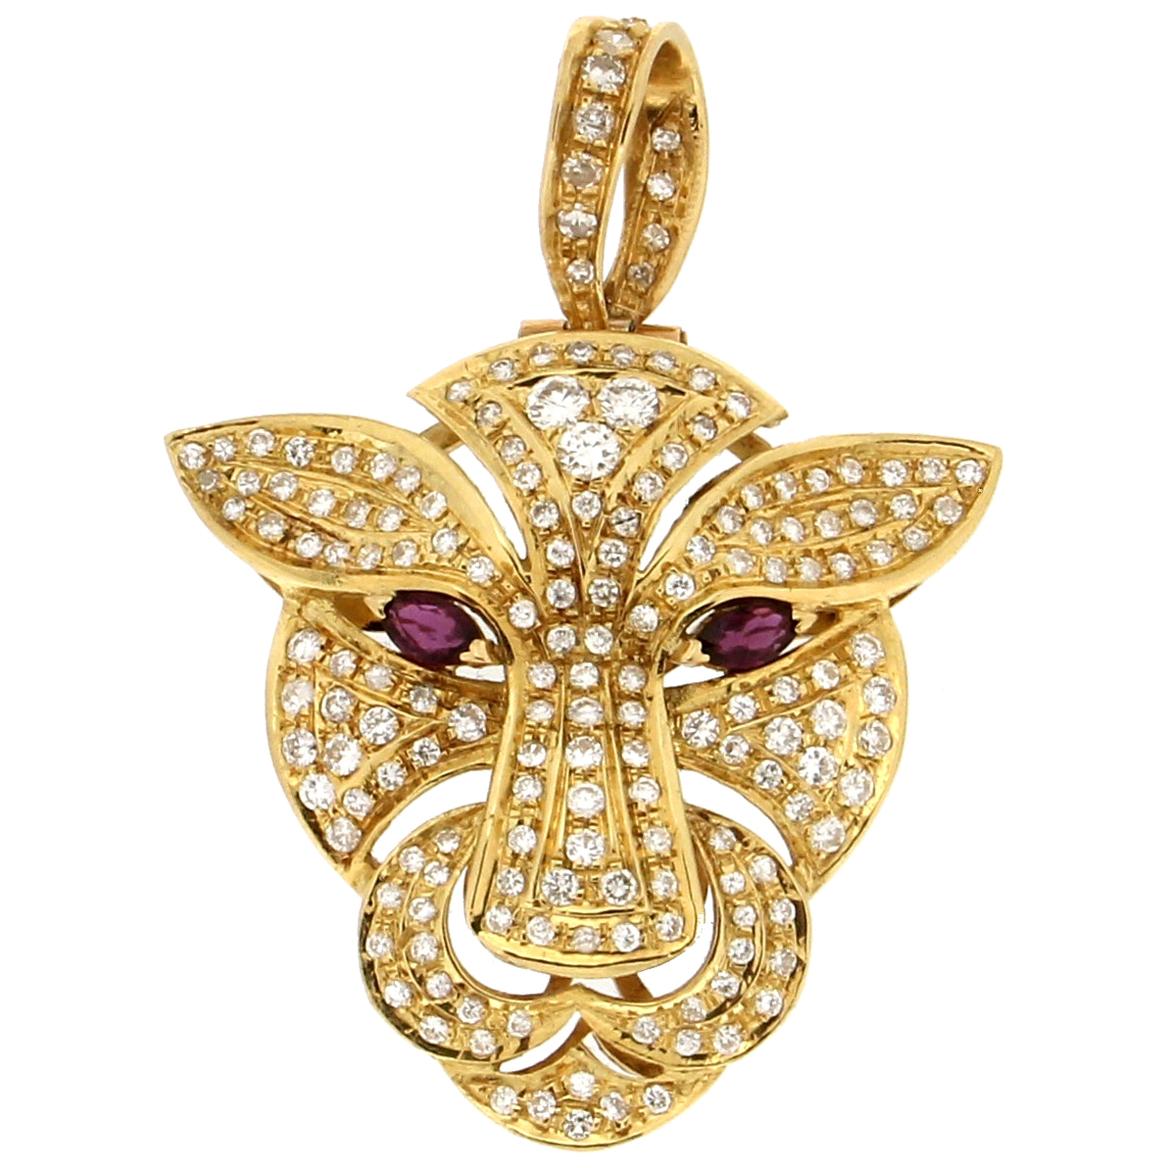 Handcraft Cougar 18 Karat Yellow Gold Diamonds Pendant Necklace